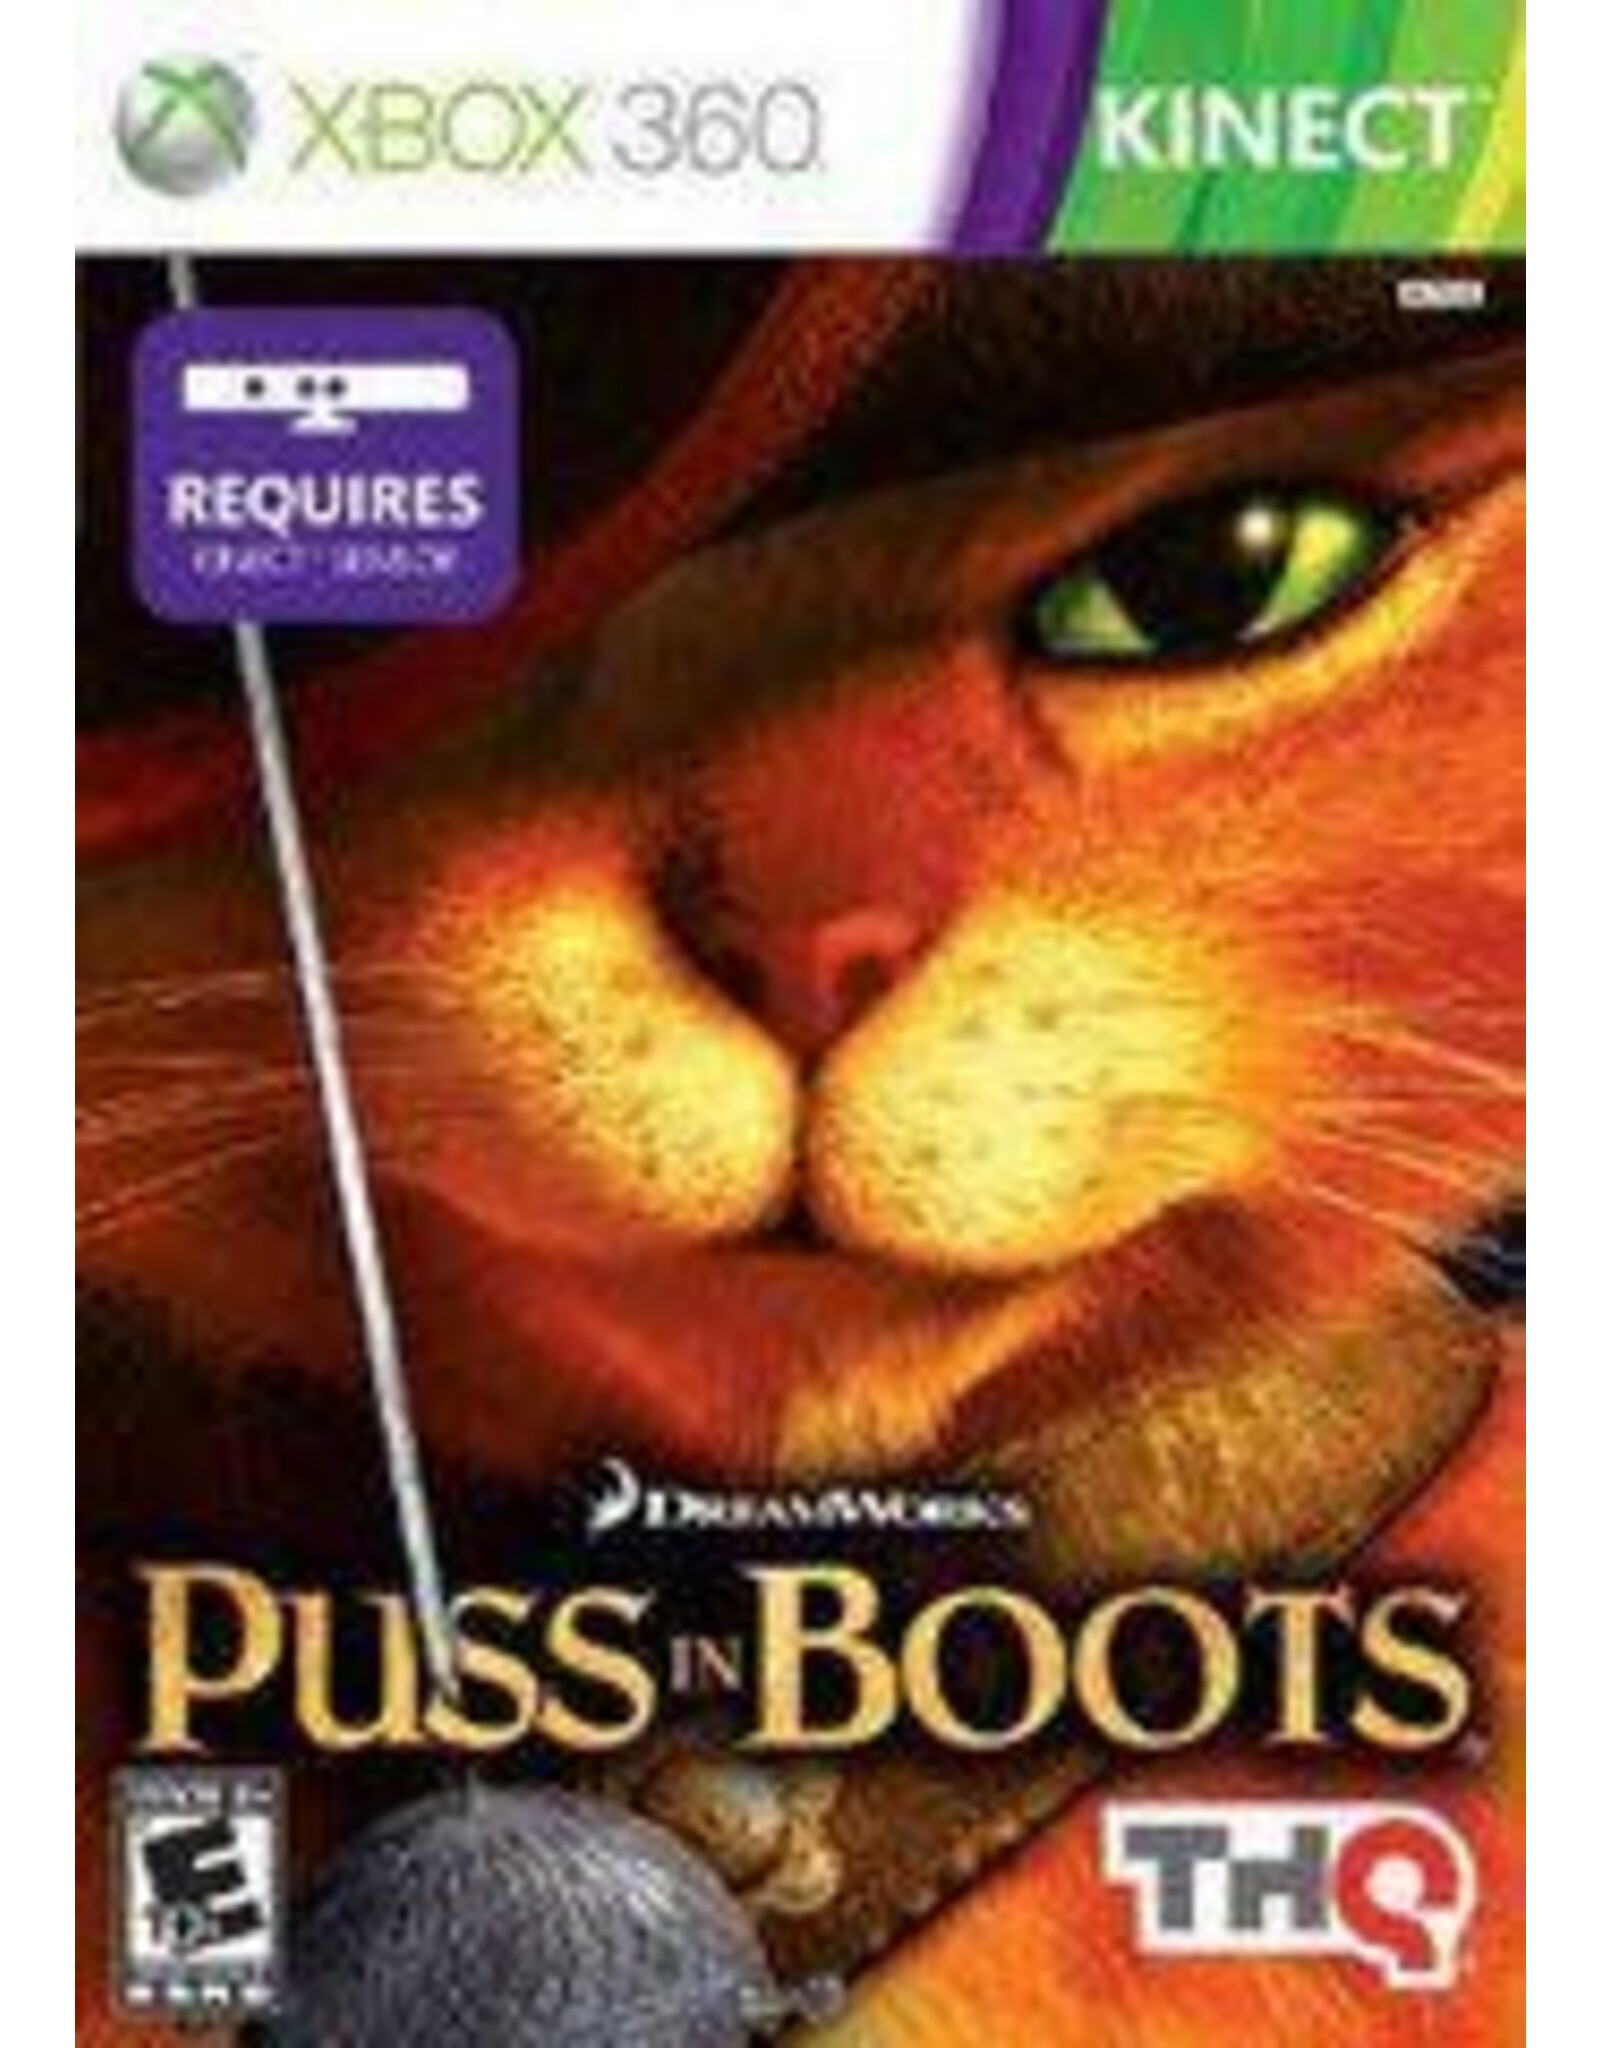 Xbox 360 Puss In Boots (CiB)